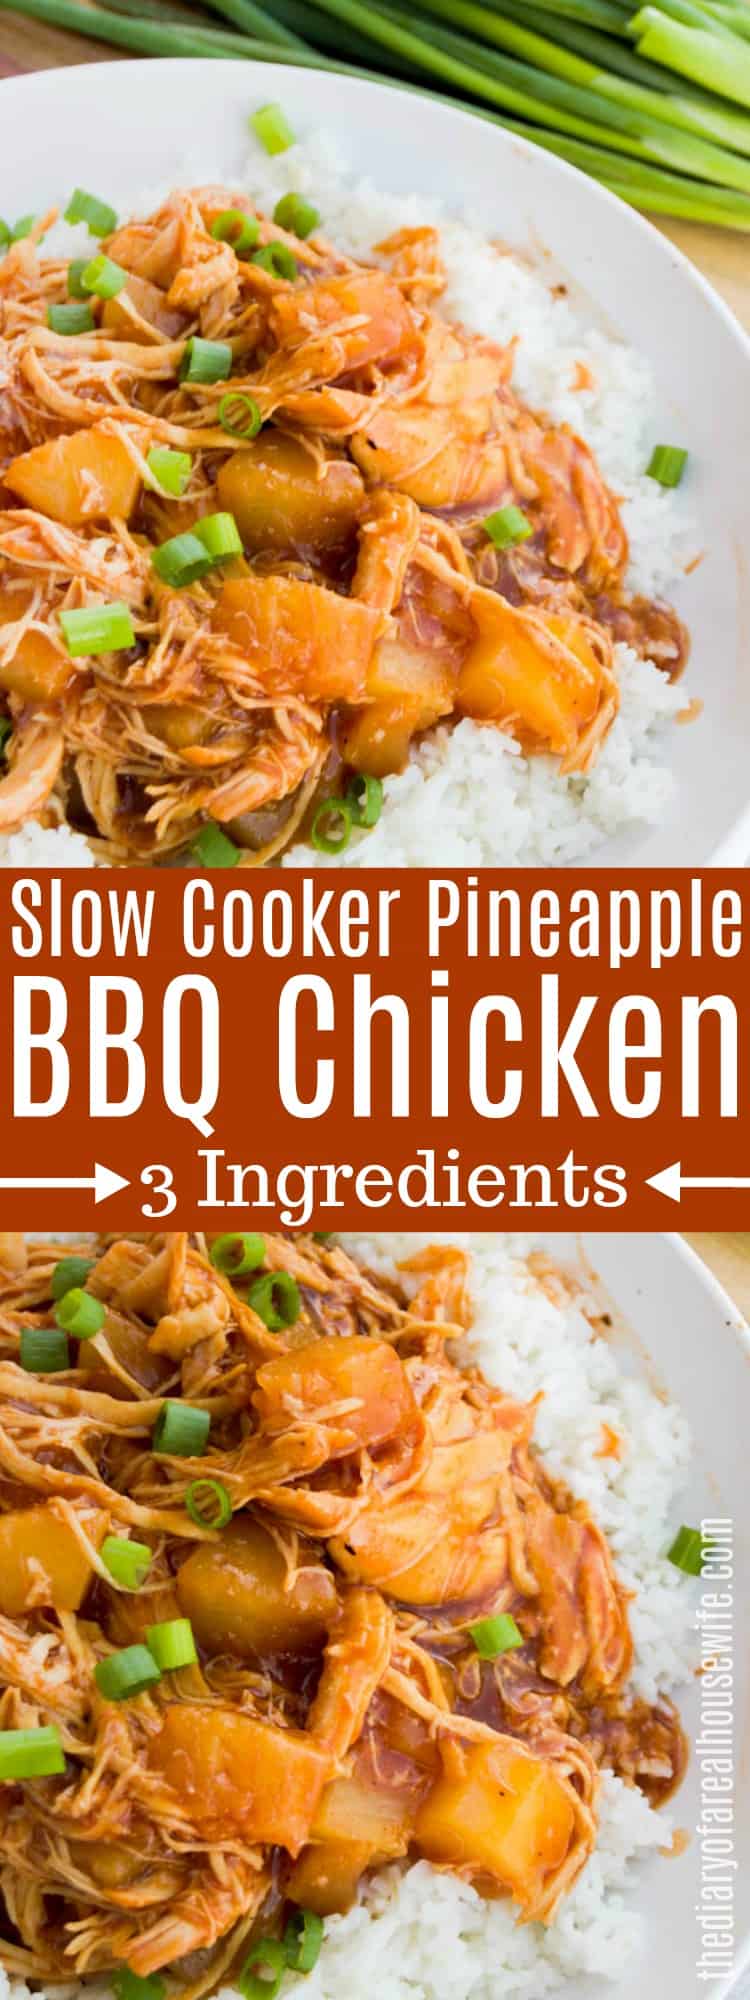 Slow Cooker Pineapple BBQ Chicken